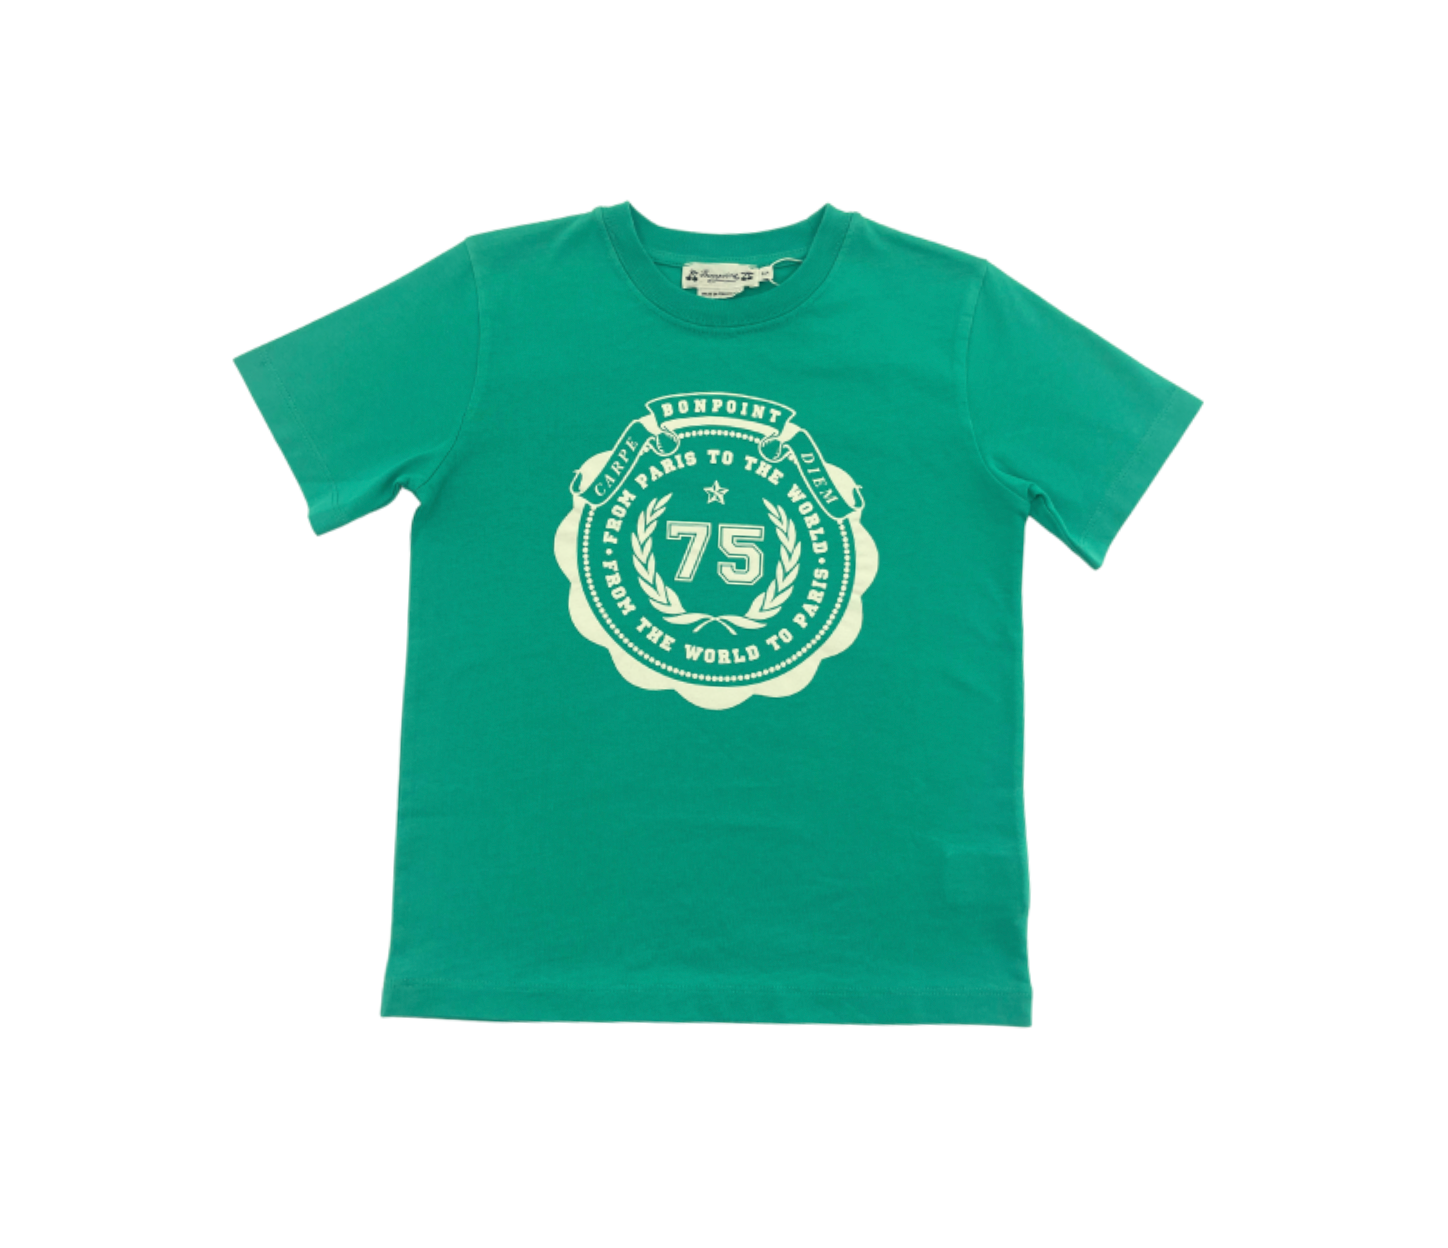 BONPOINT - T-shirt vert détail - 6 ans